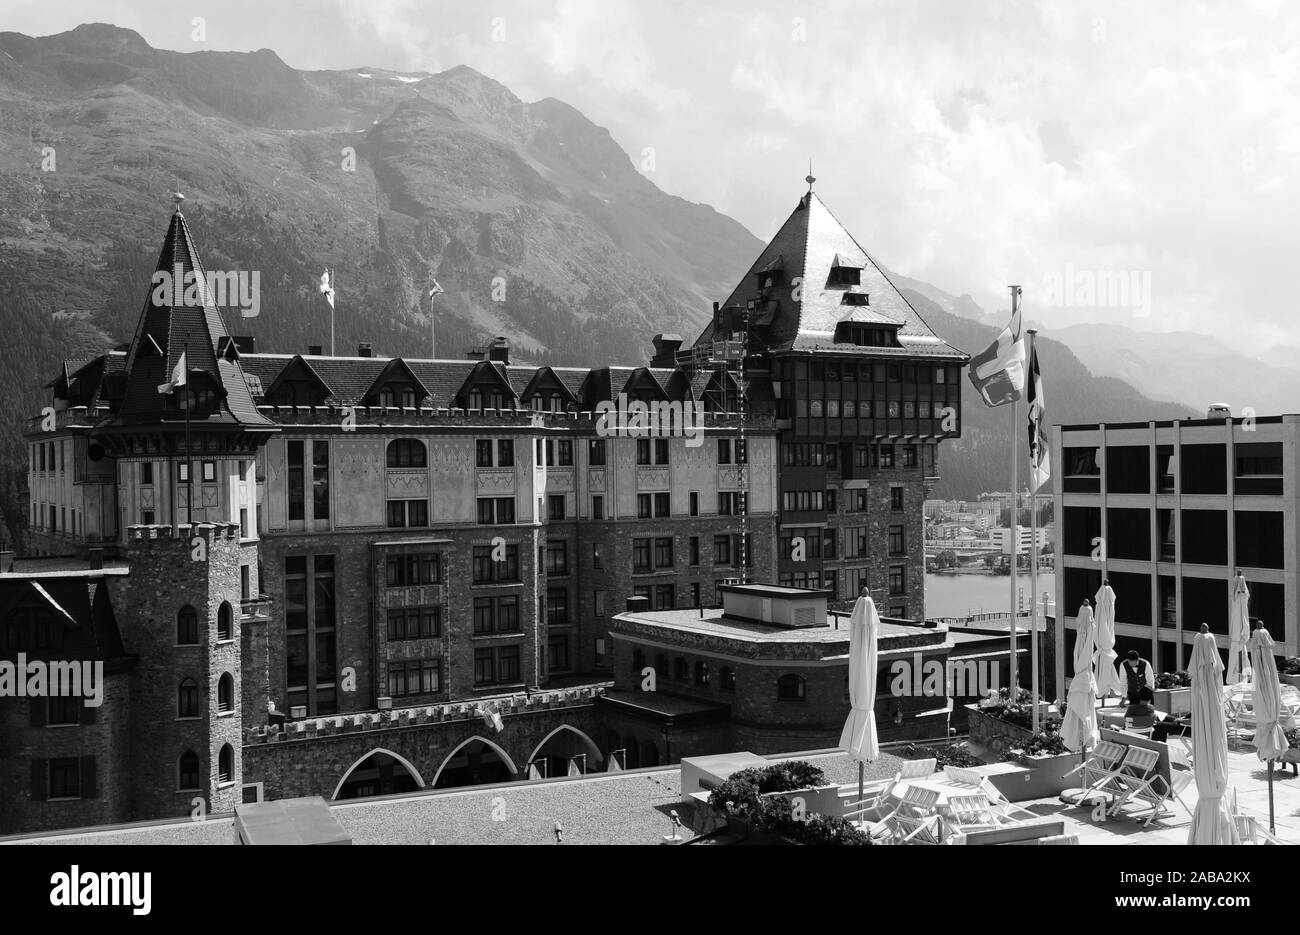 Swiss alps: The legendary Badrutt palace hotel in St. Moritz Stock Photo